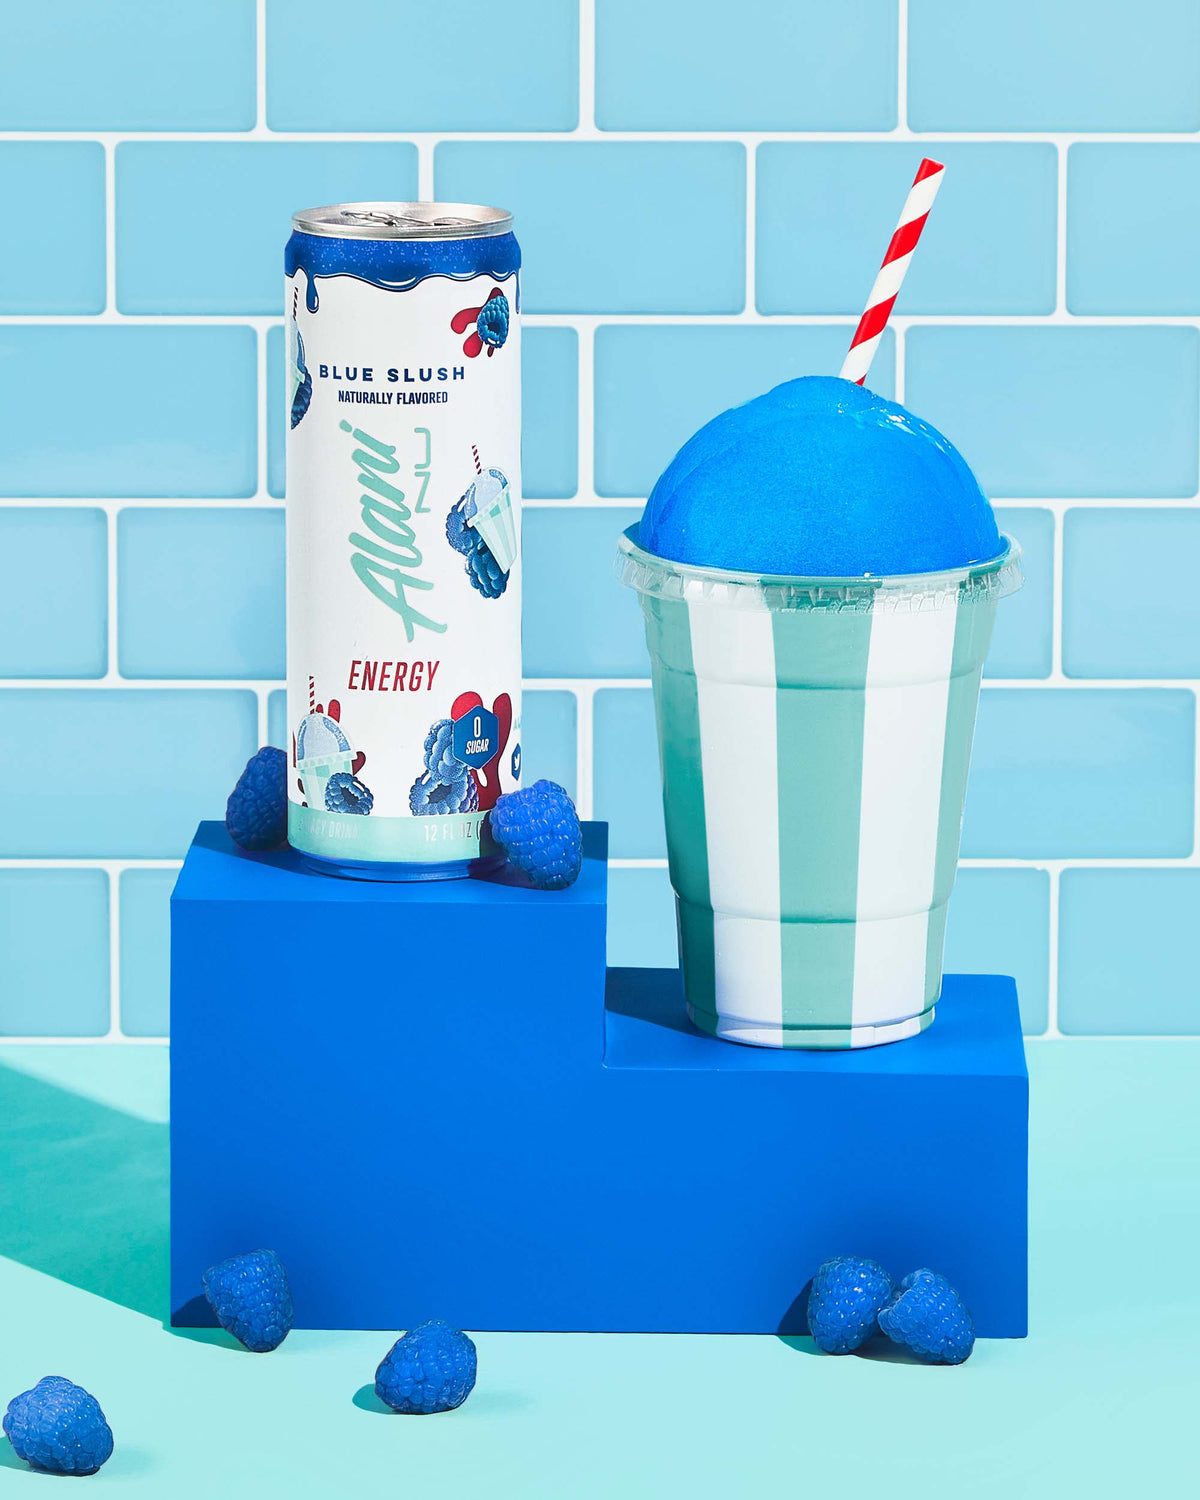 An Energy Drink - Blue Slush and a blue cup on a blue slushie.